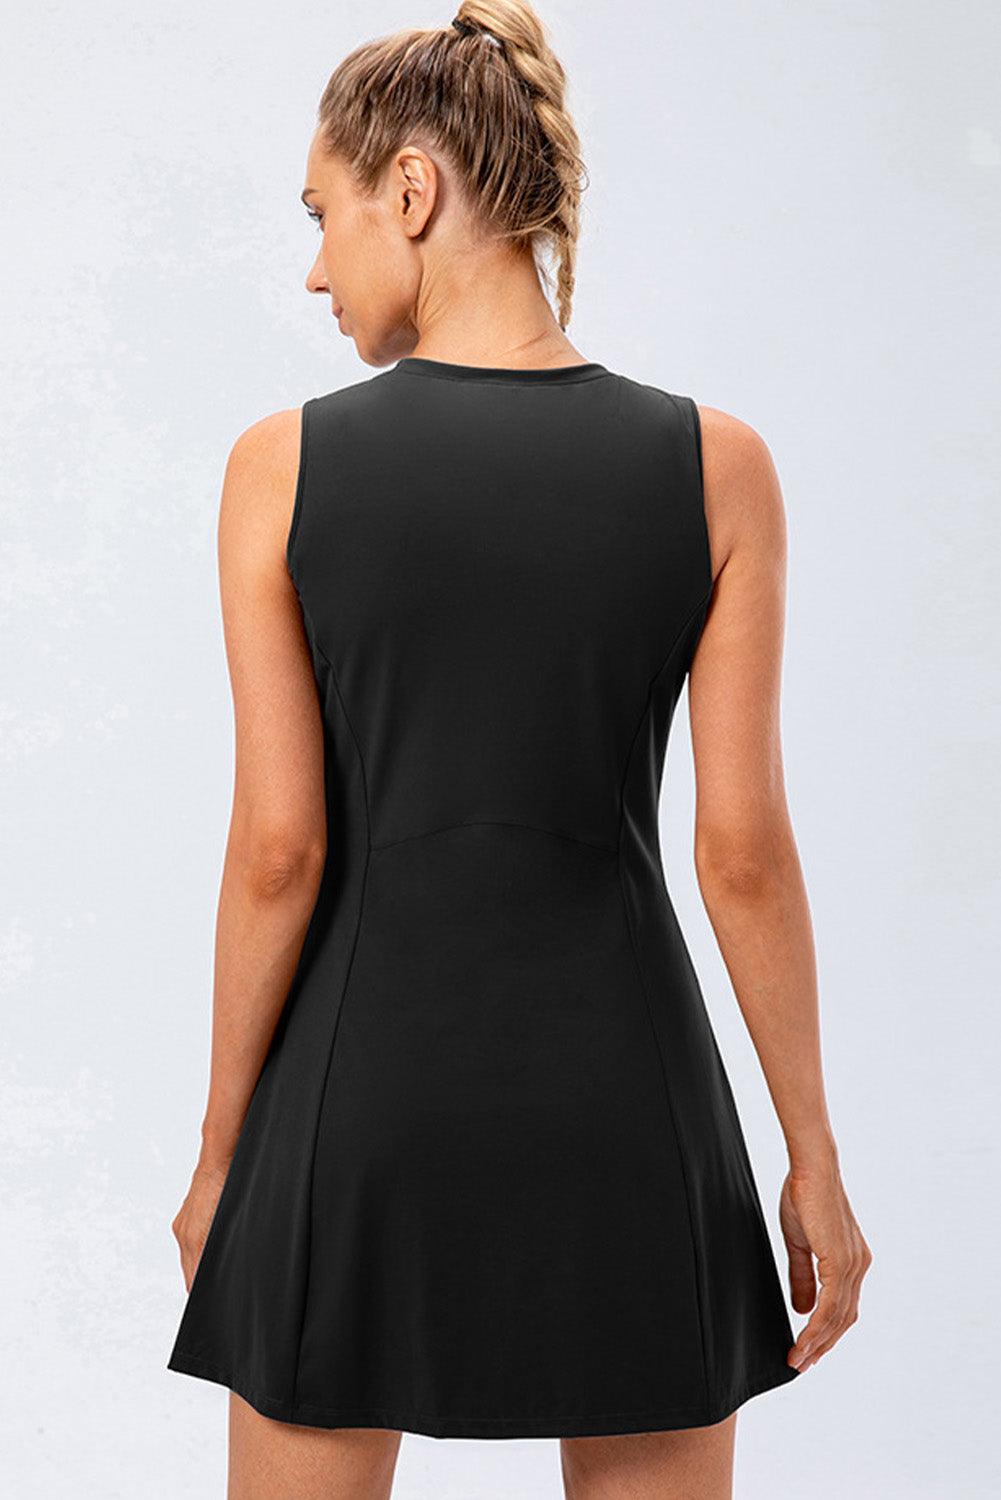 Black Solid Color Sleeveless Basic Active Mini Dress - L & M Kee, LLC